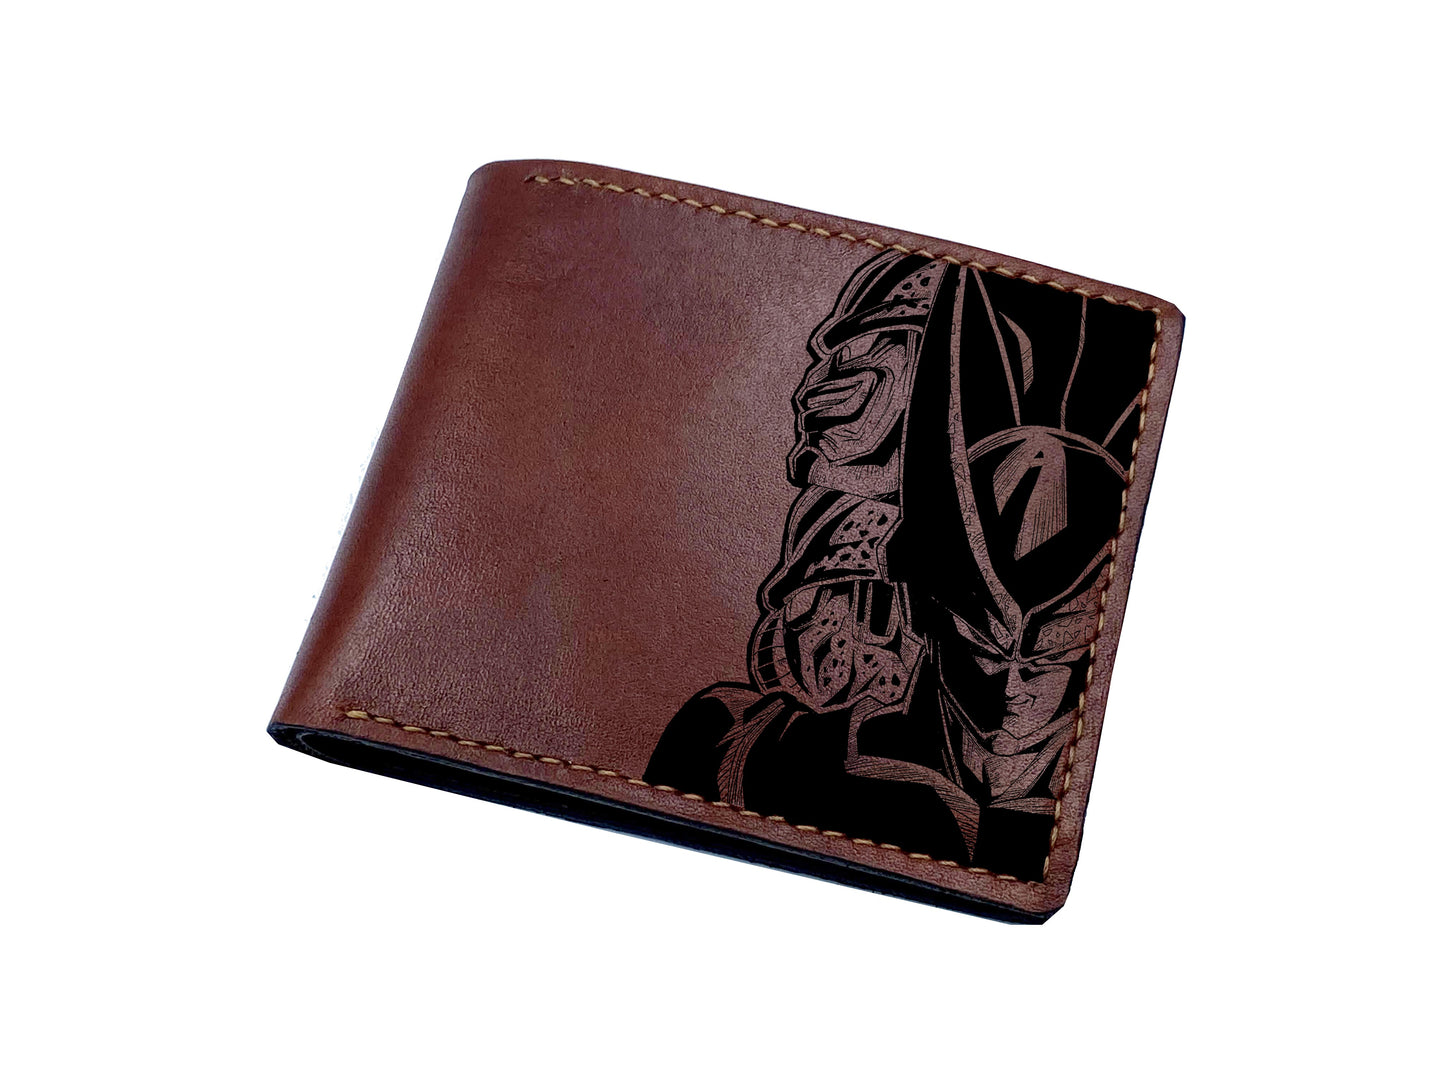 Mayan Corner - Broly super saiyan leather wallet, bifold handmade wallet, gift for men, dragon ball art leather gift for him